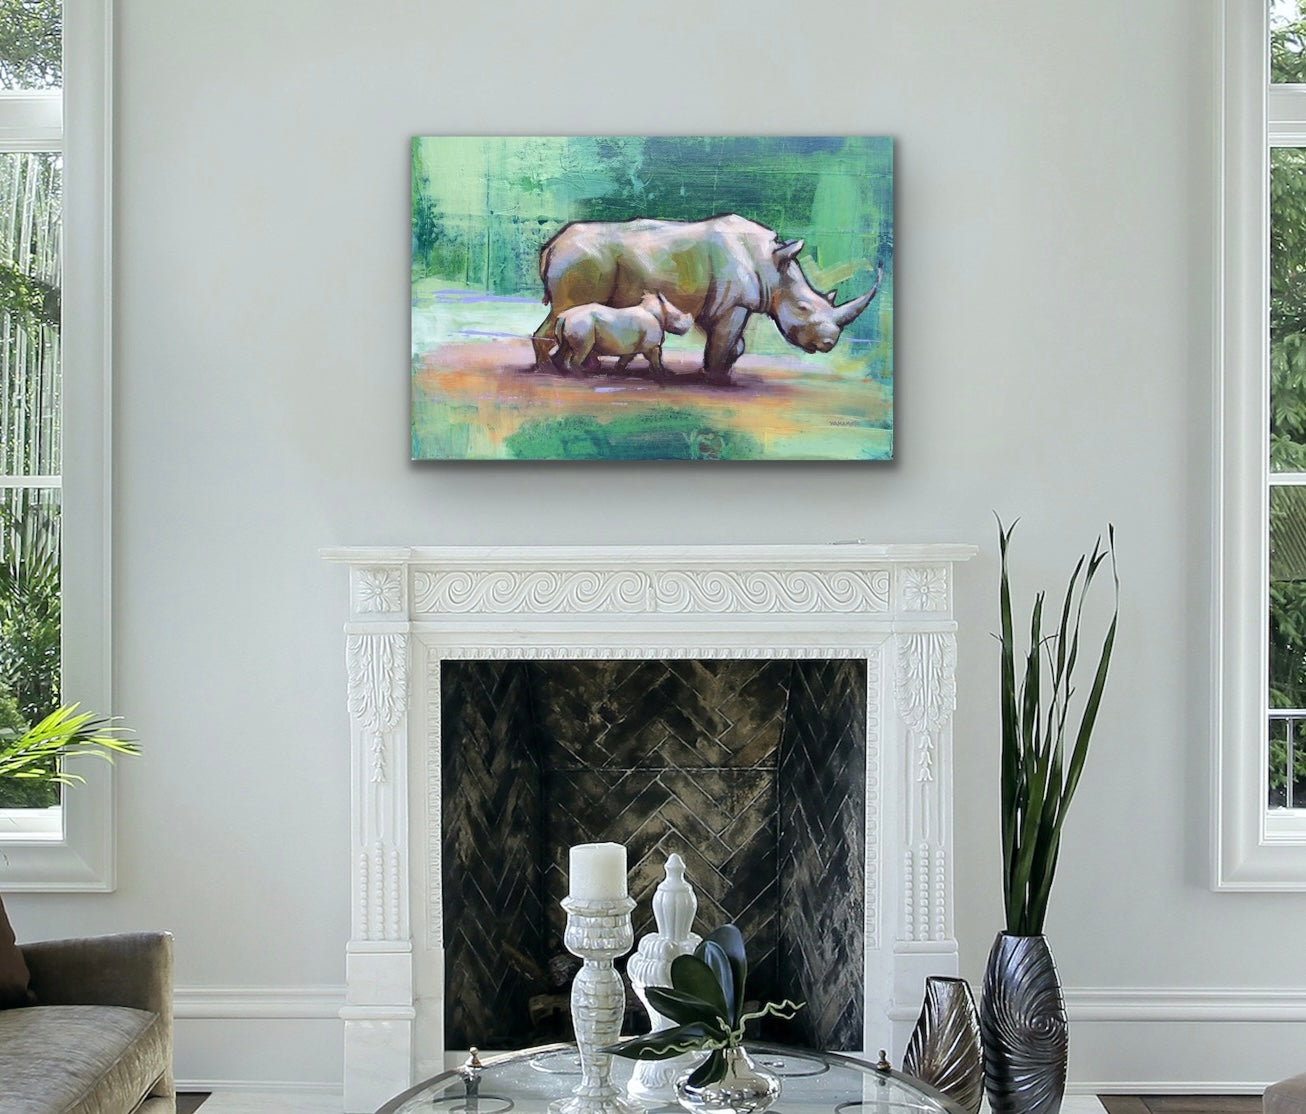 Love Your Rhinos, Zimbabwe - a mom and baby rhino art print